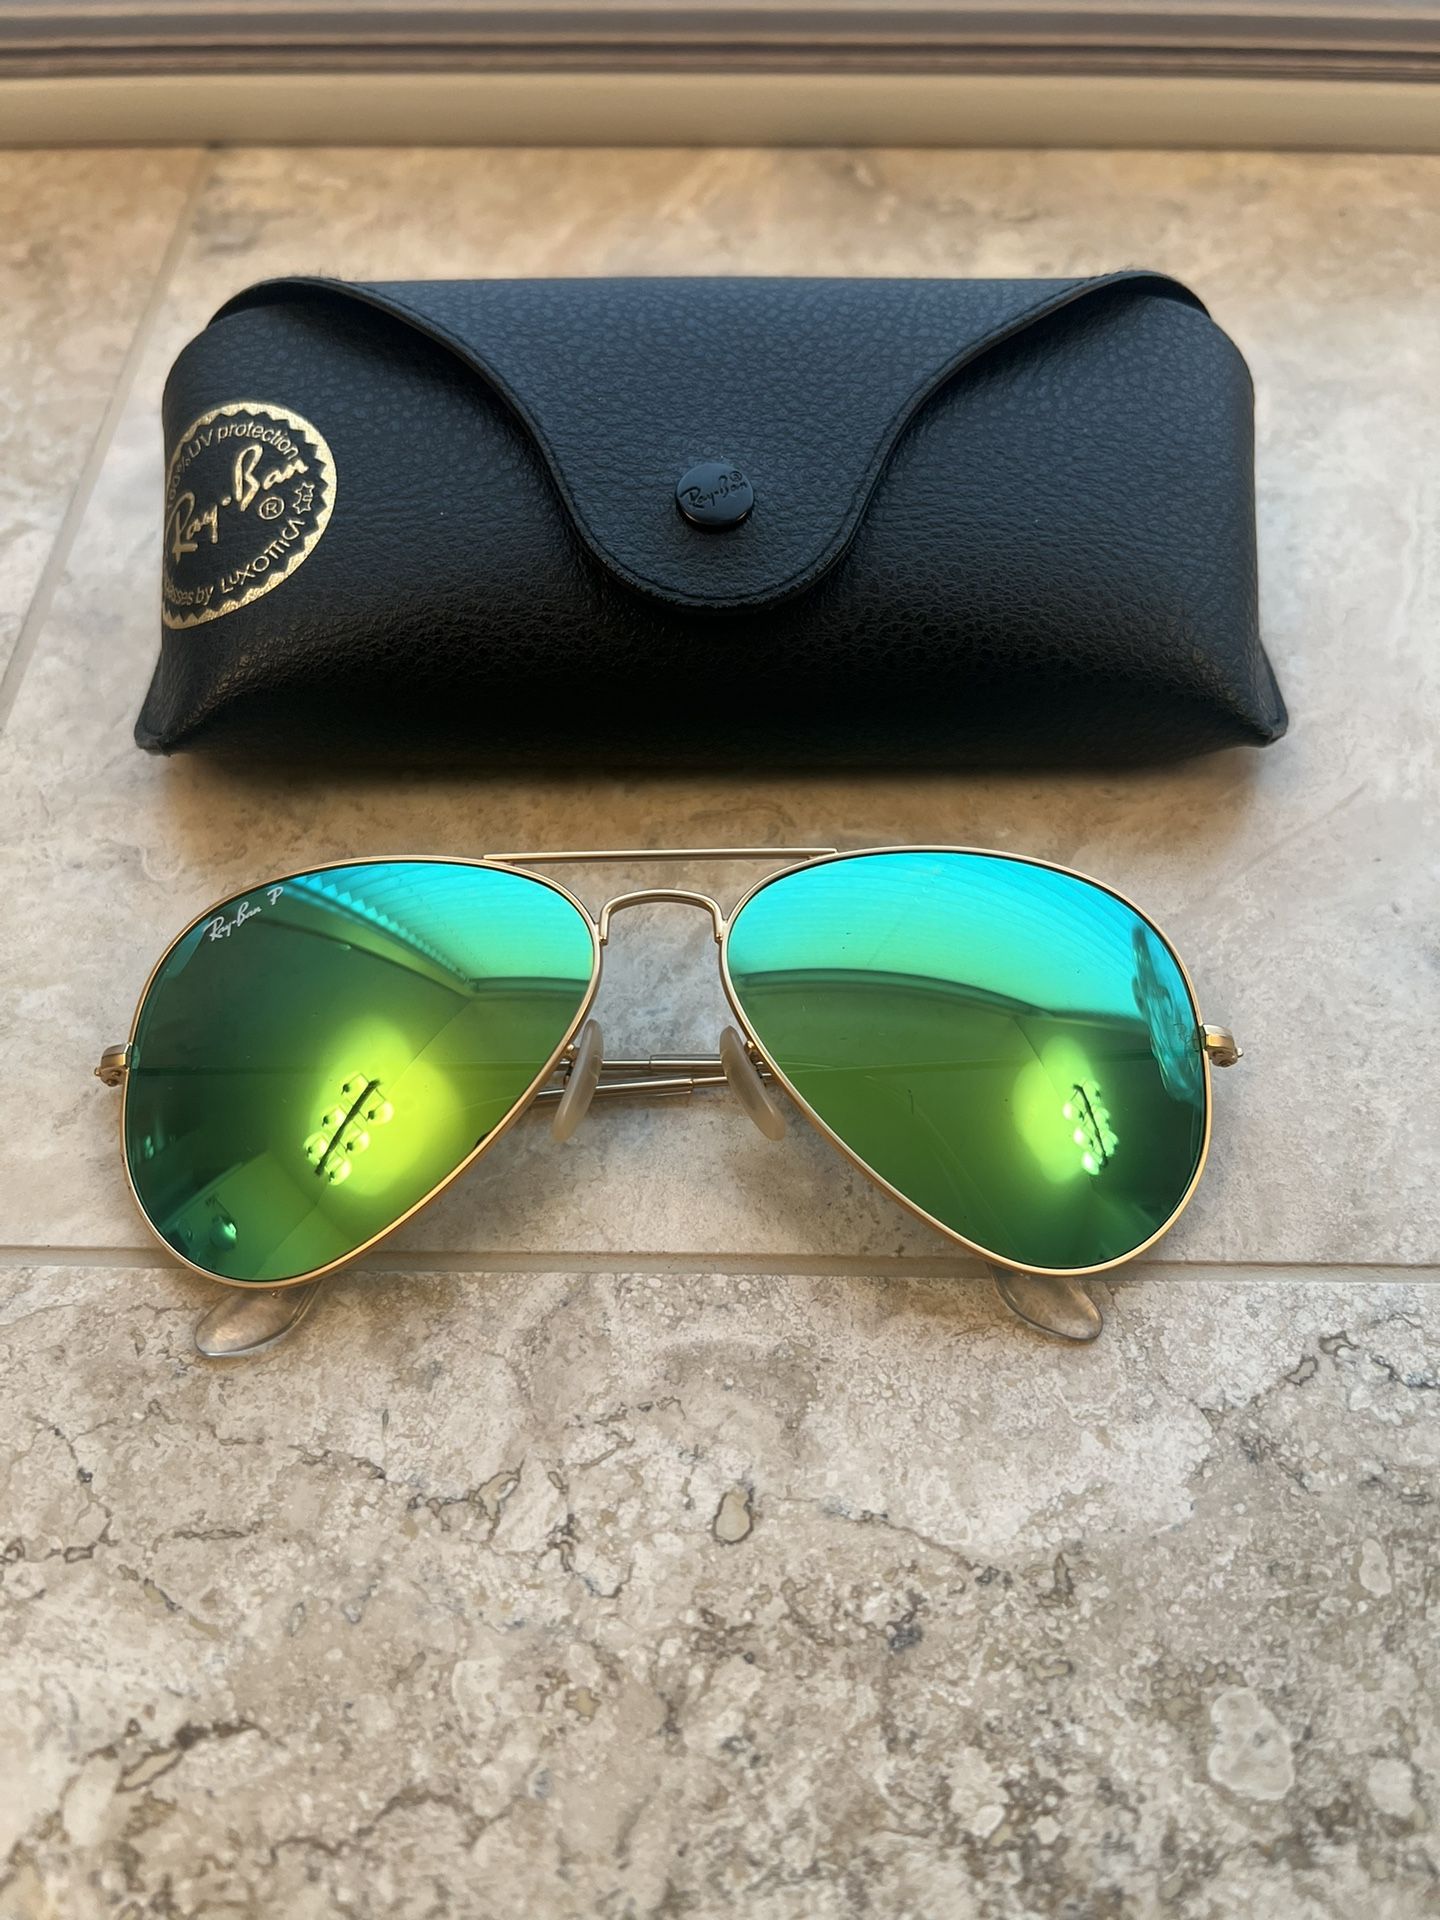 Ray-Ban Aviator Polarized Sunglasses (RB3025) - $100 OBOt